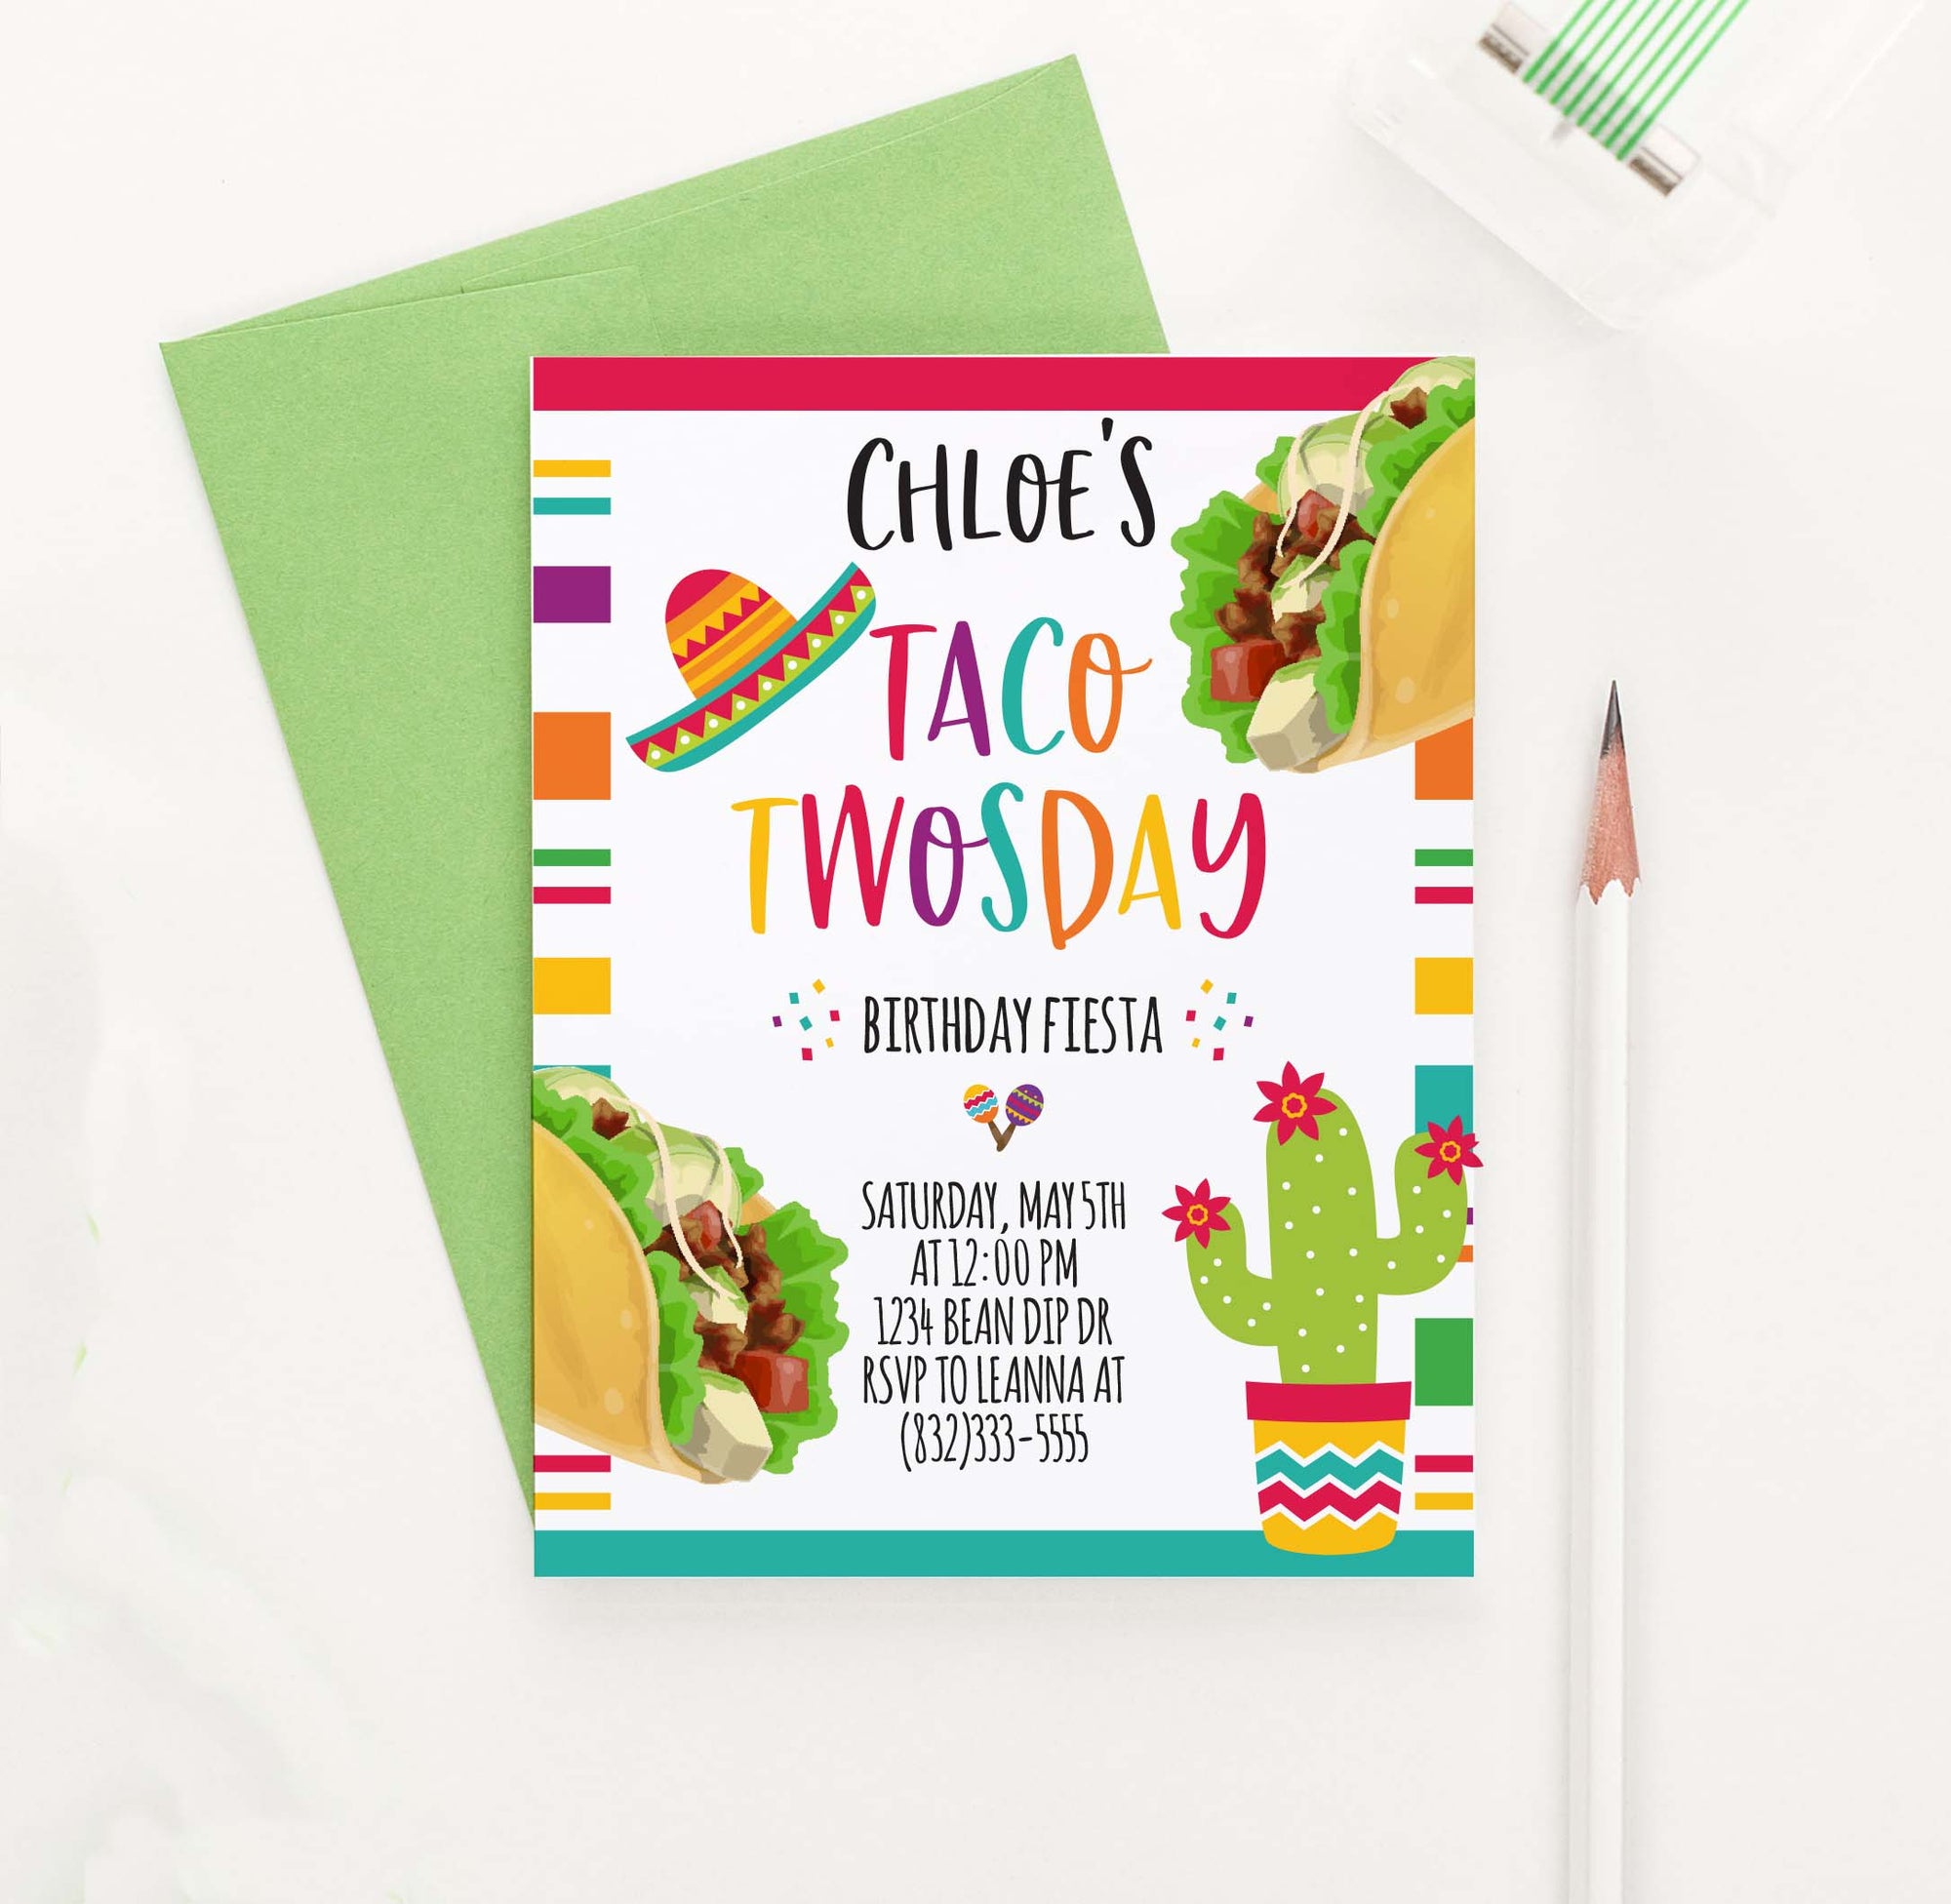 BI064 taco tuesday fiesta birthday party invites personalized cactus tacos festive